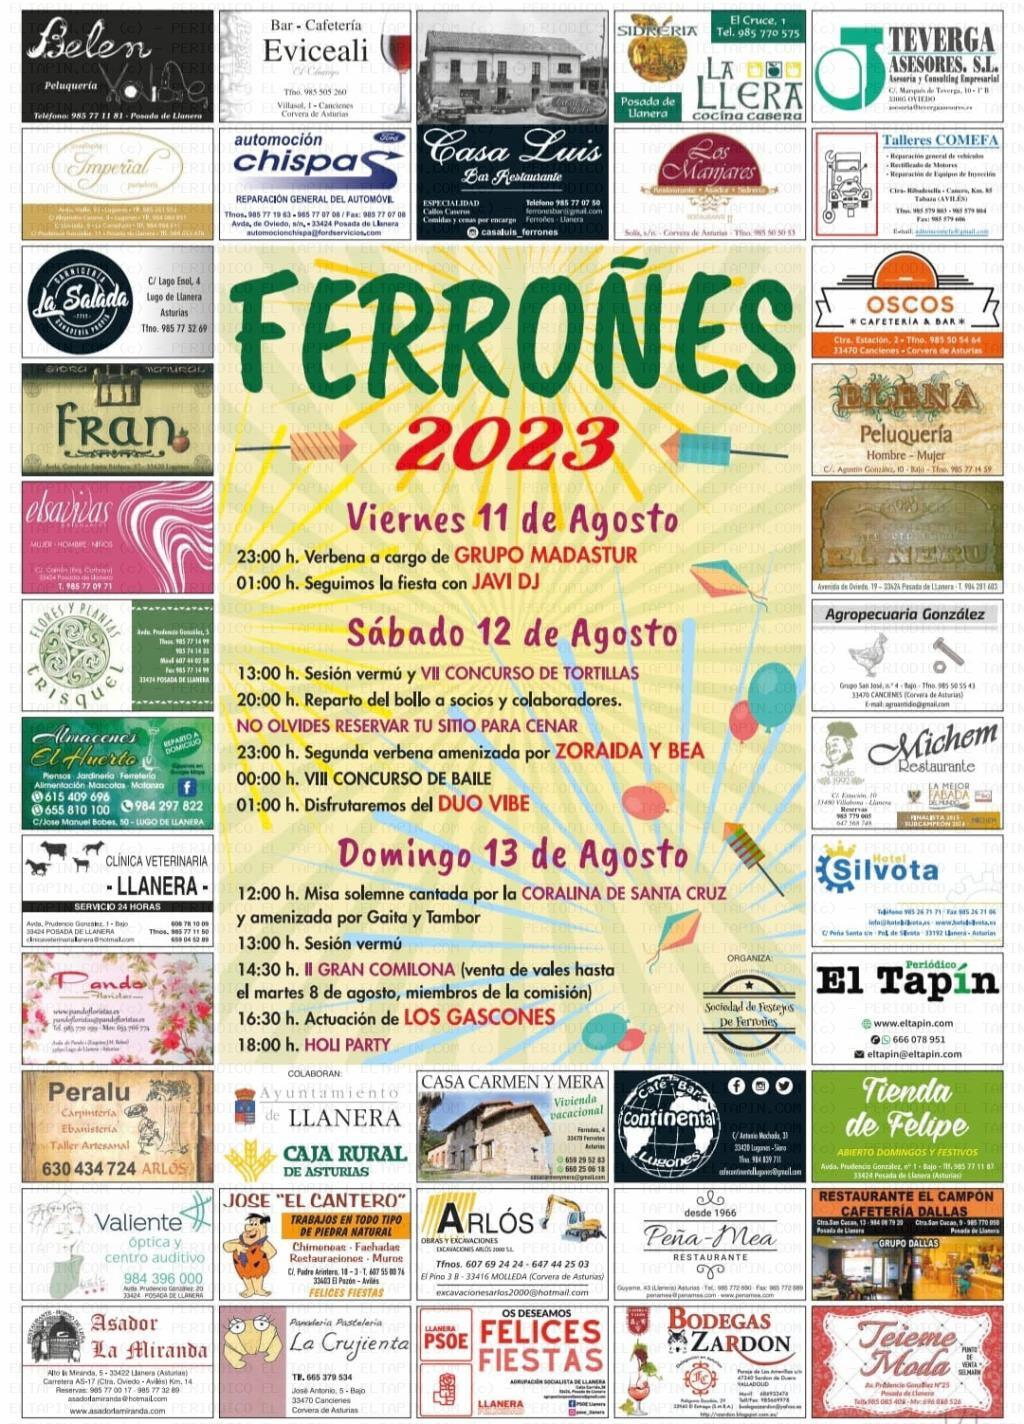 El Tapin - Ferroñes celebra sus fiestas del 11 al 13 de agosto